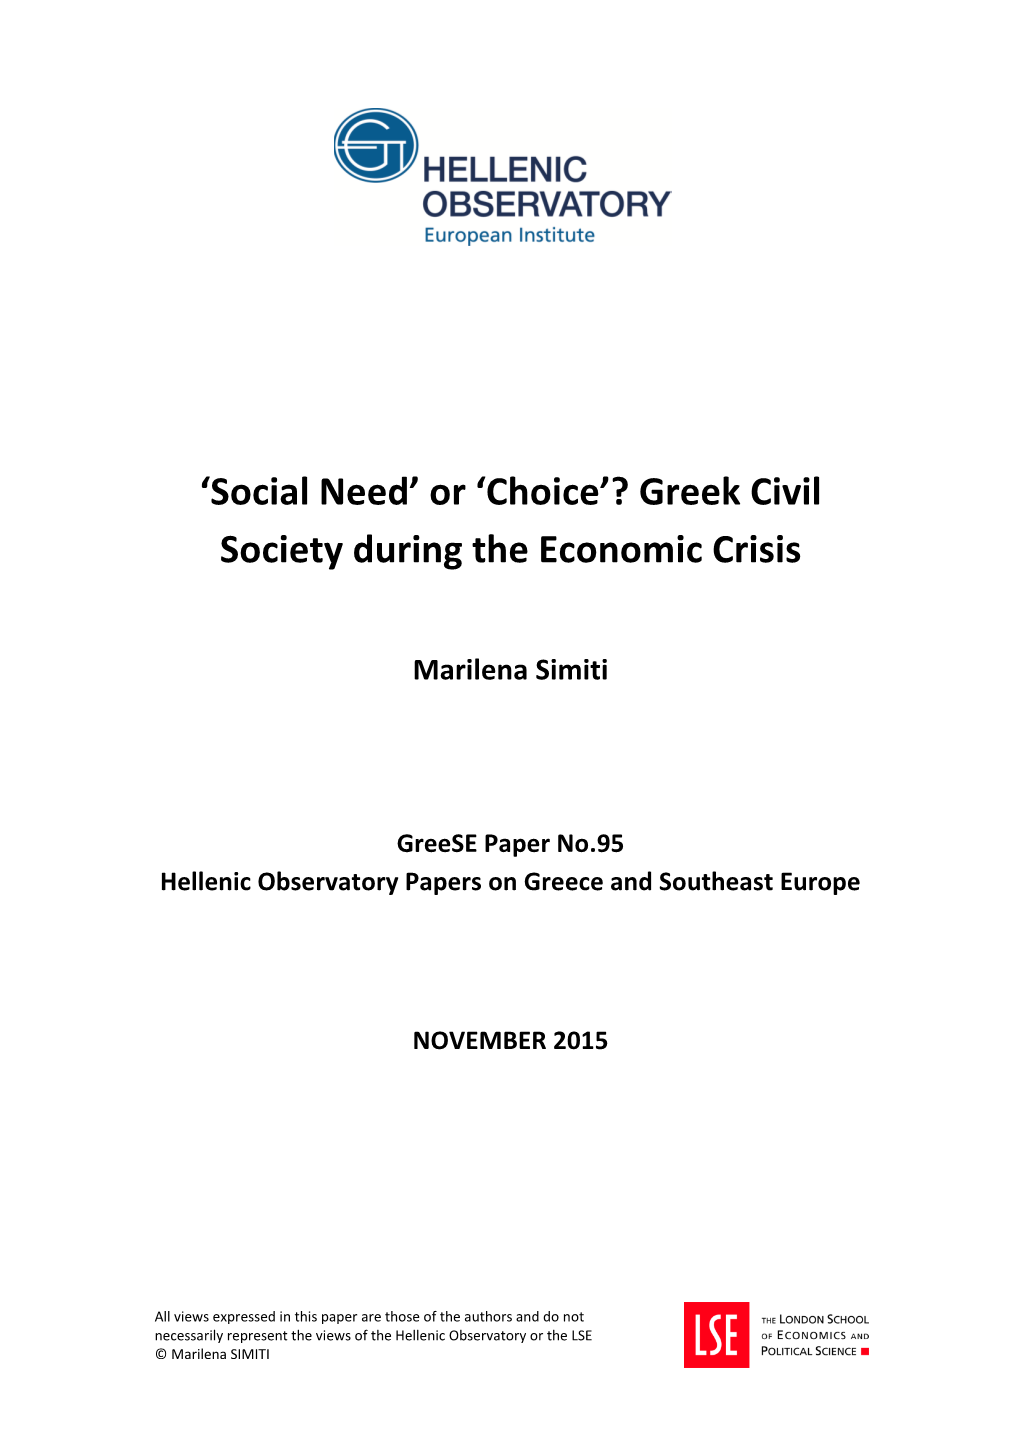 Greek Civil Society During the Economic Crisis